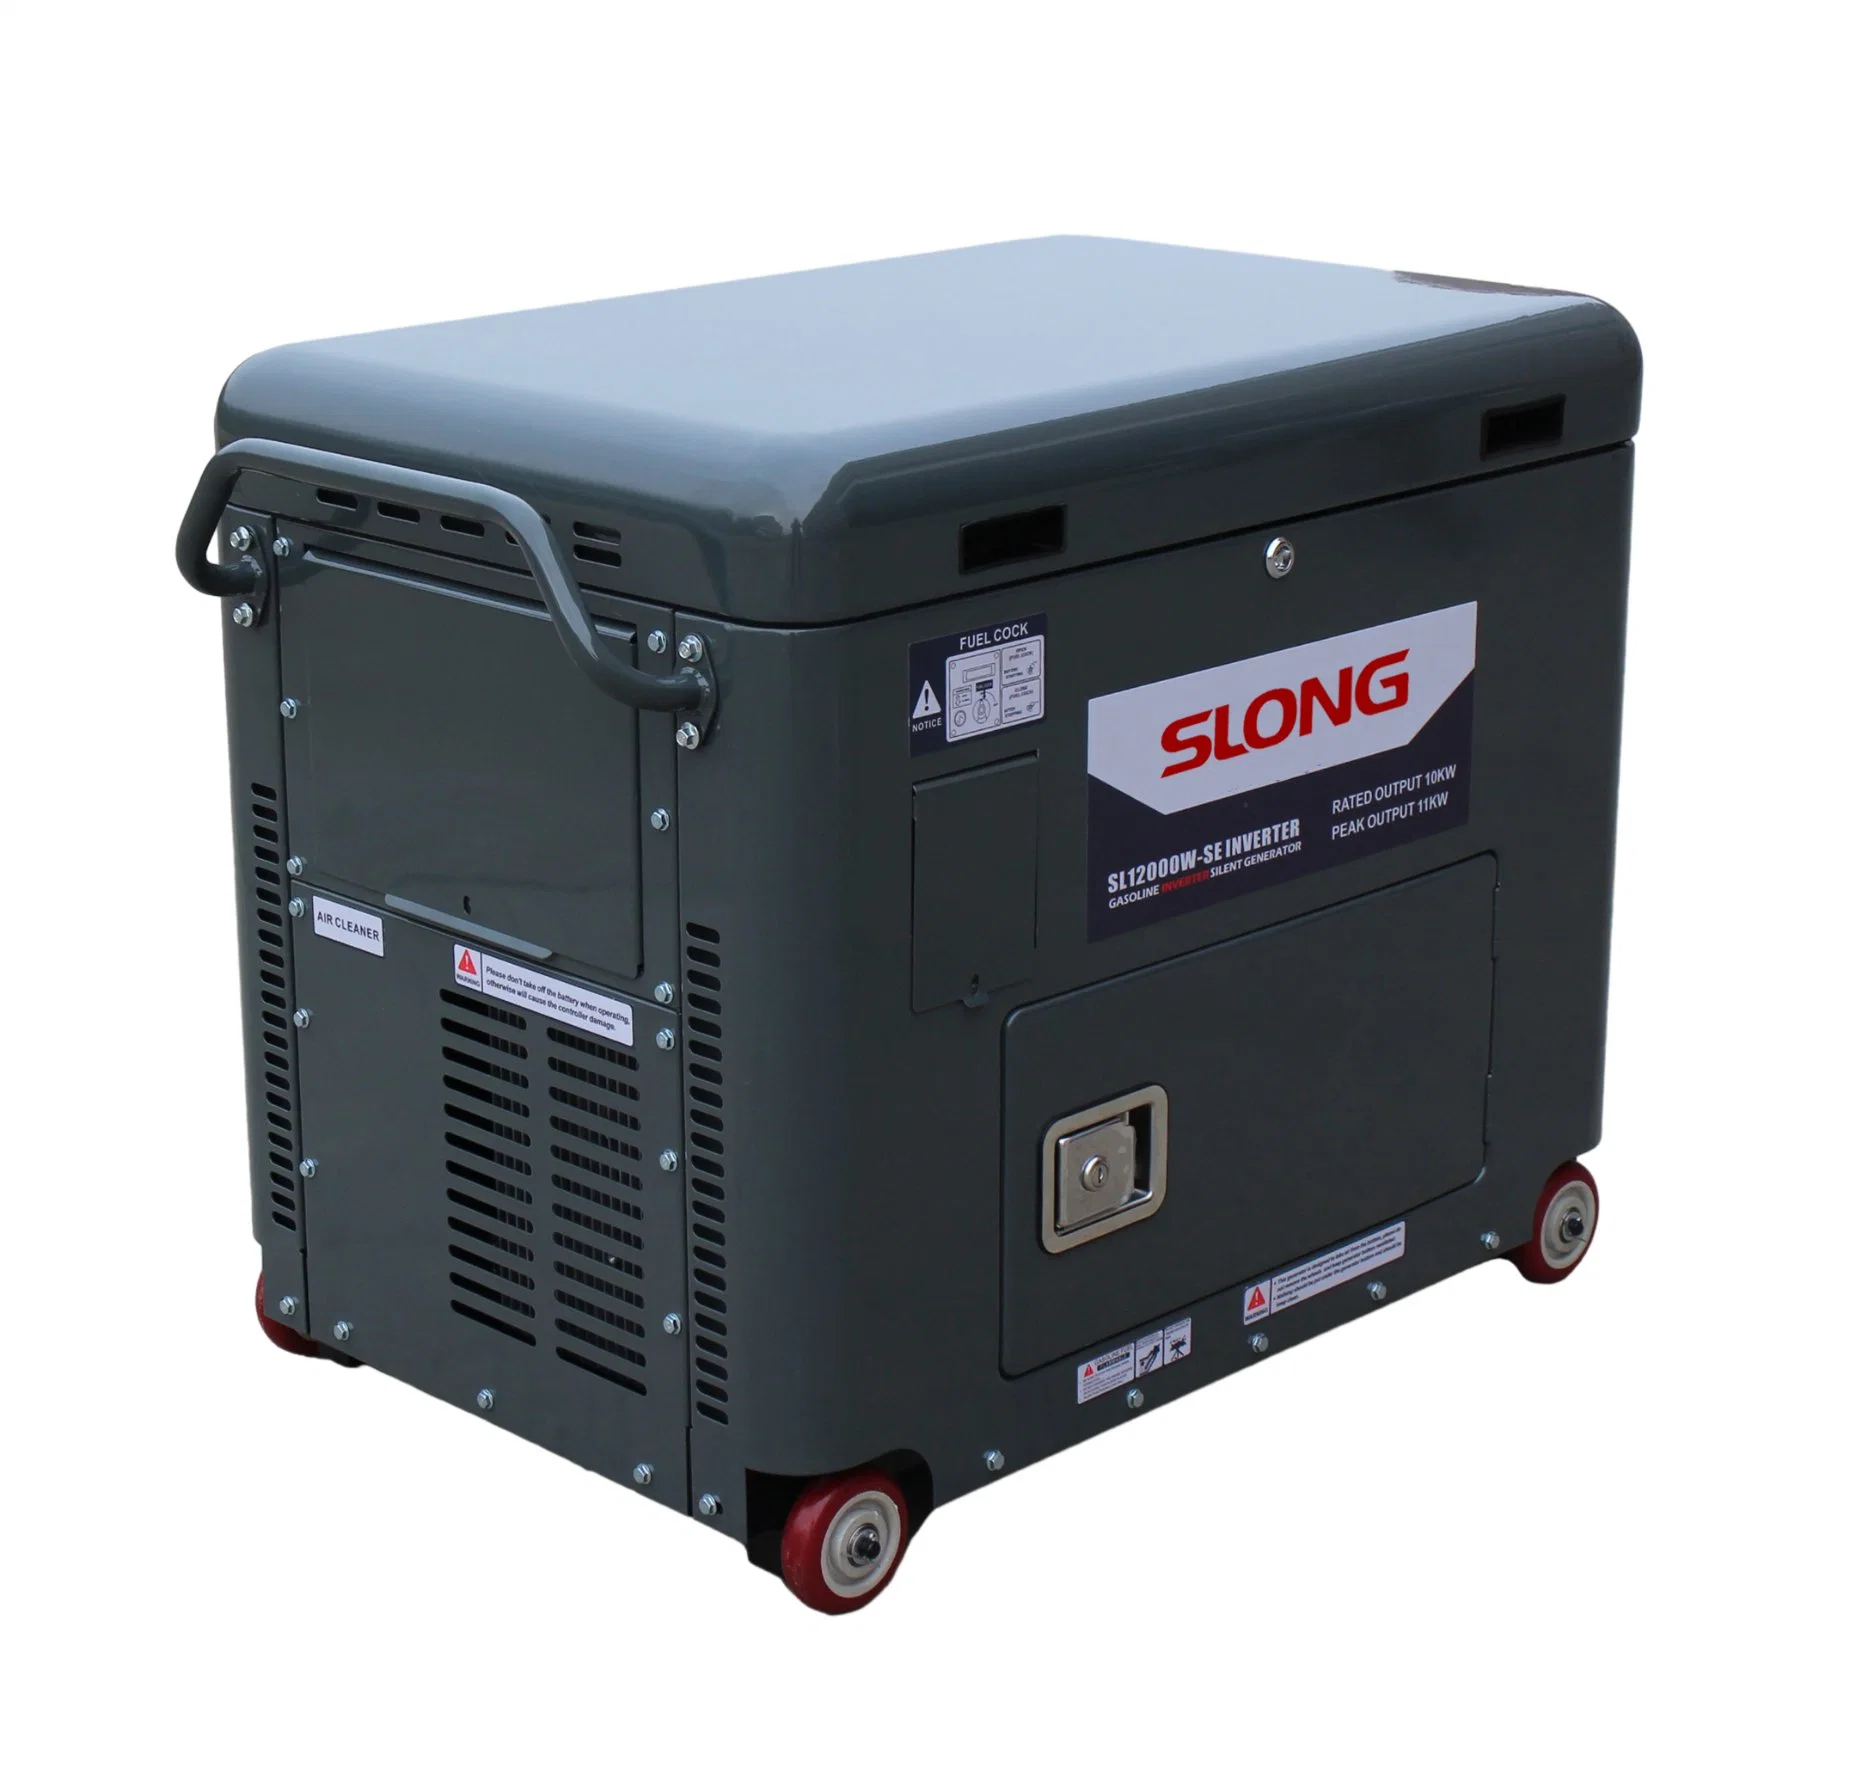 E. Slong Brand Home Standby Power 10kw Silent Inverter Generator